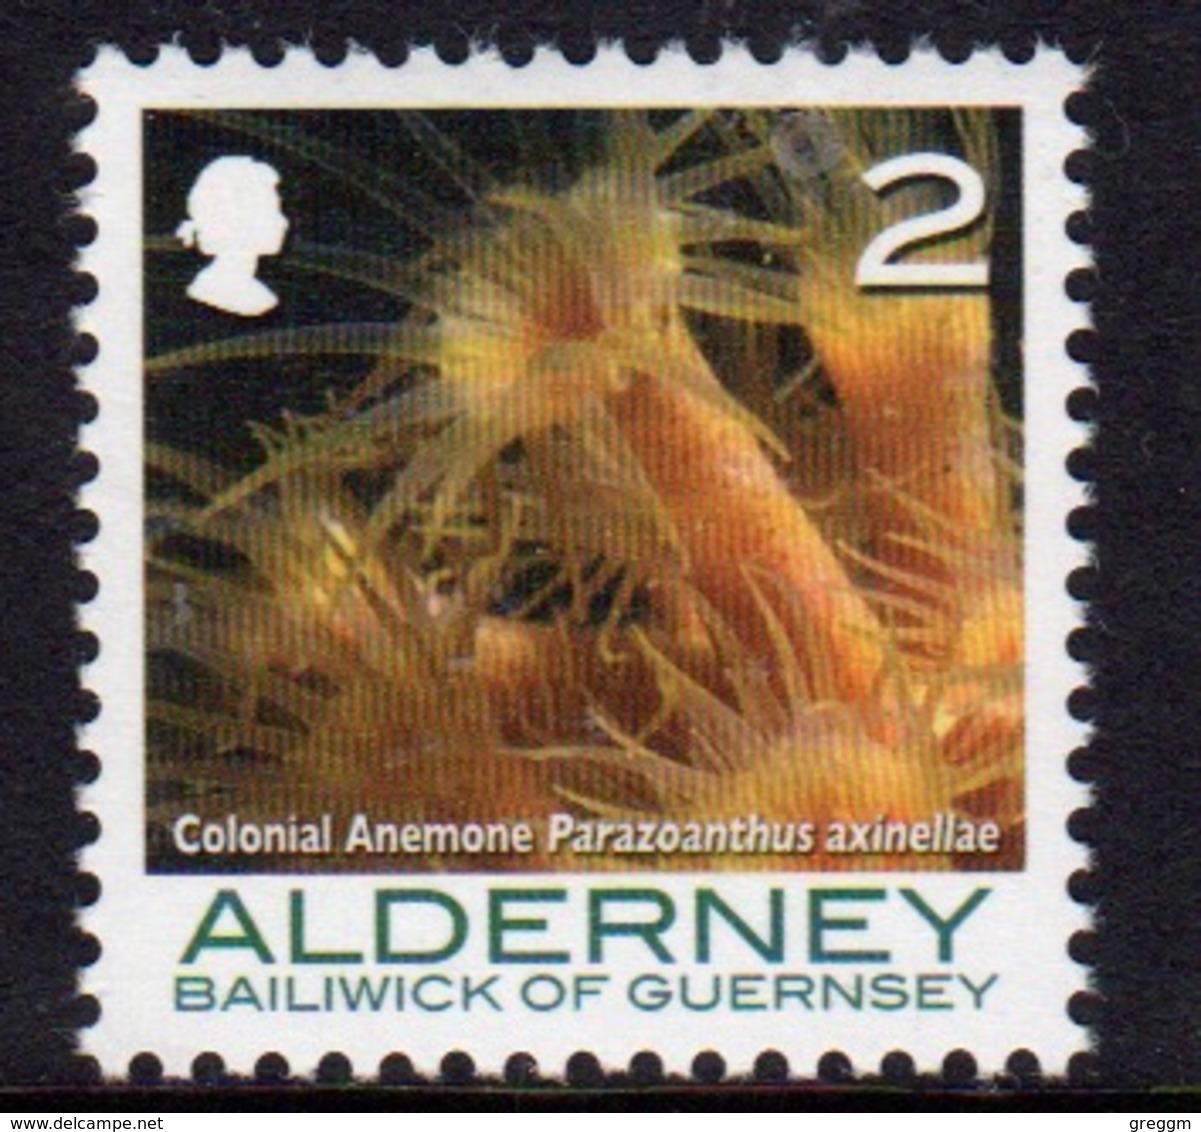 Alderney Single 2p Stamp From The 'Corals And Anemones' Definitive Set. - Alderney